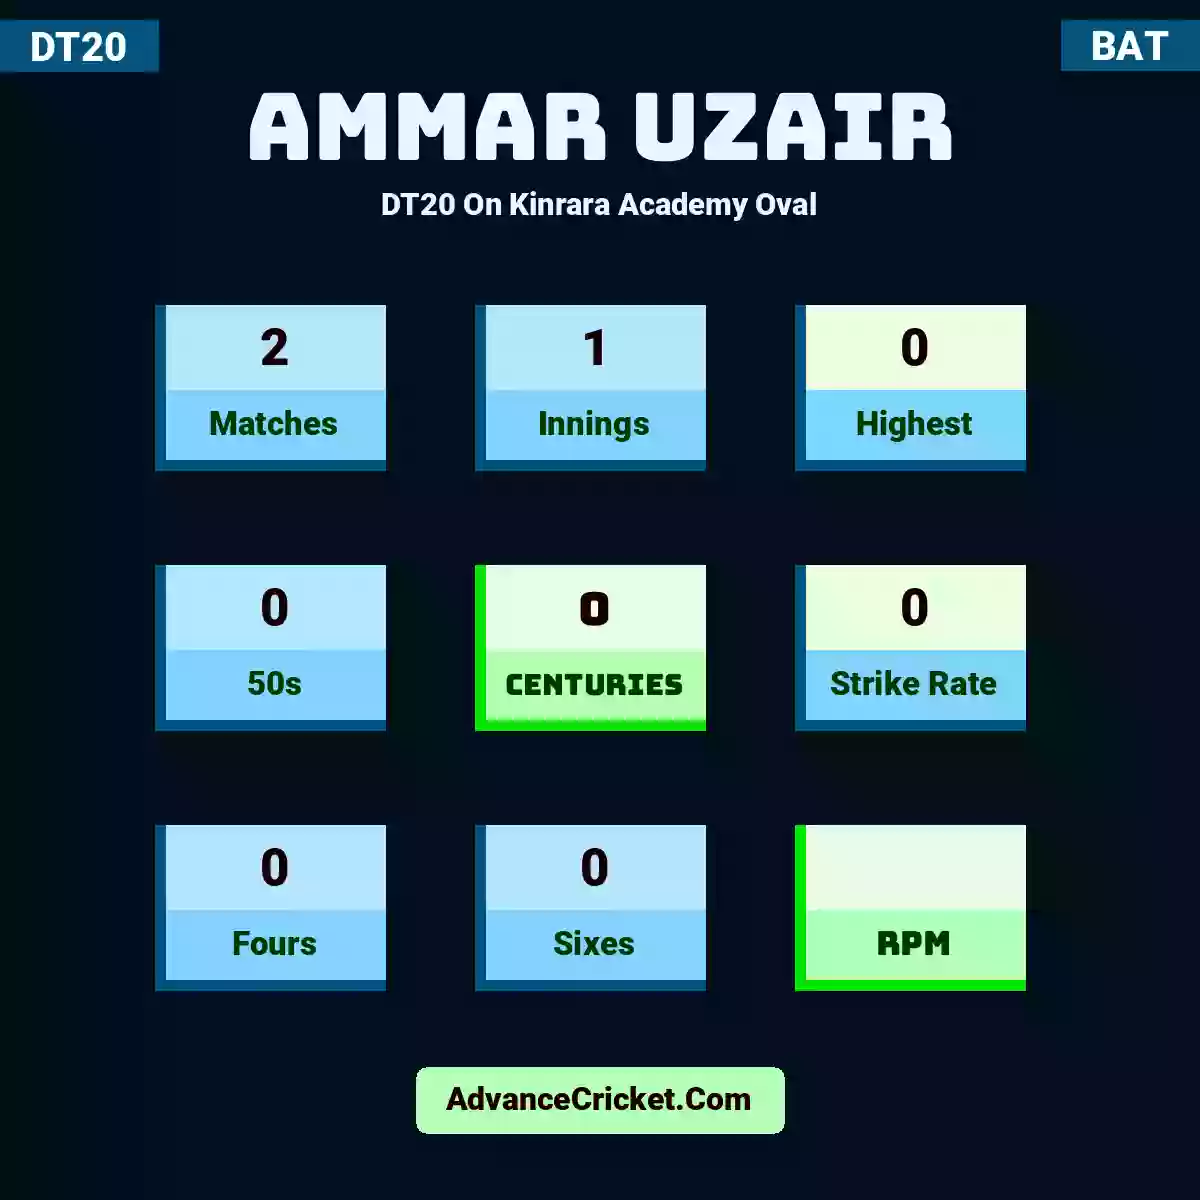 Ammar Uzair DT20  On Kinrara Academy Oval, Ammar Uzair played 2 matches, scored 0 runs as highest, 0 half-centuries, and 0 centuries, with a strike rate of 0. A.Uzair hit 0 fours and 0 sixes.